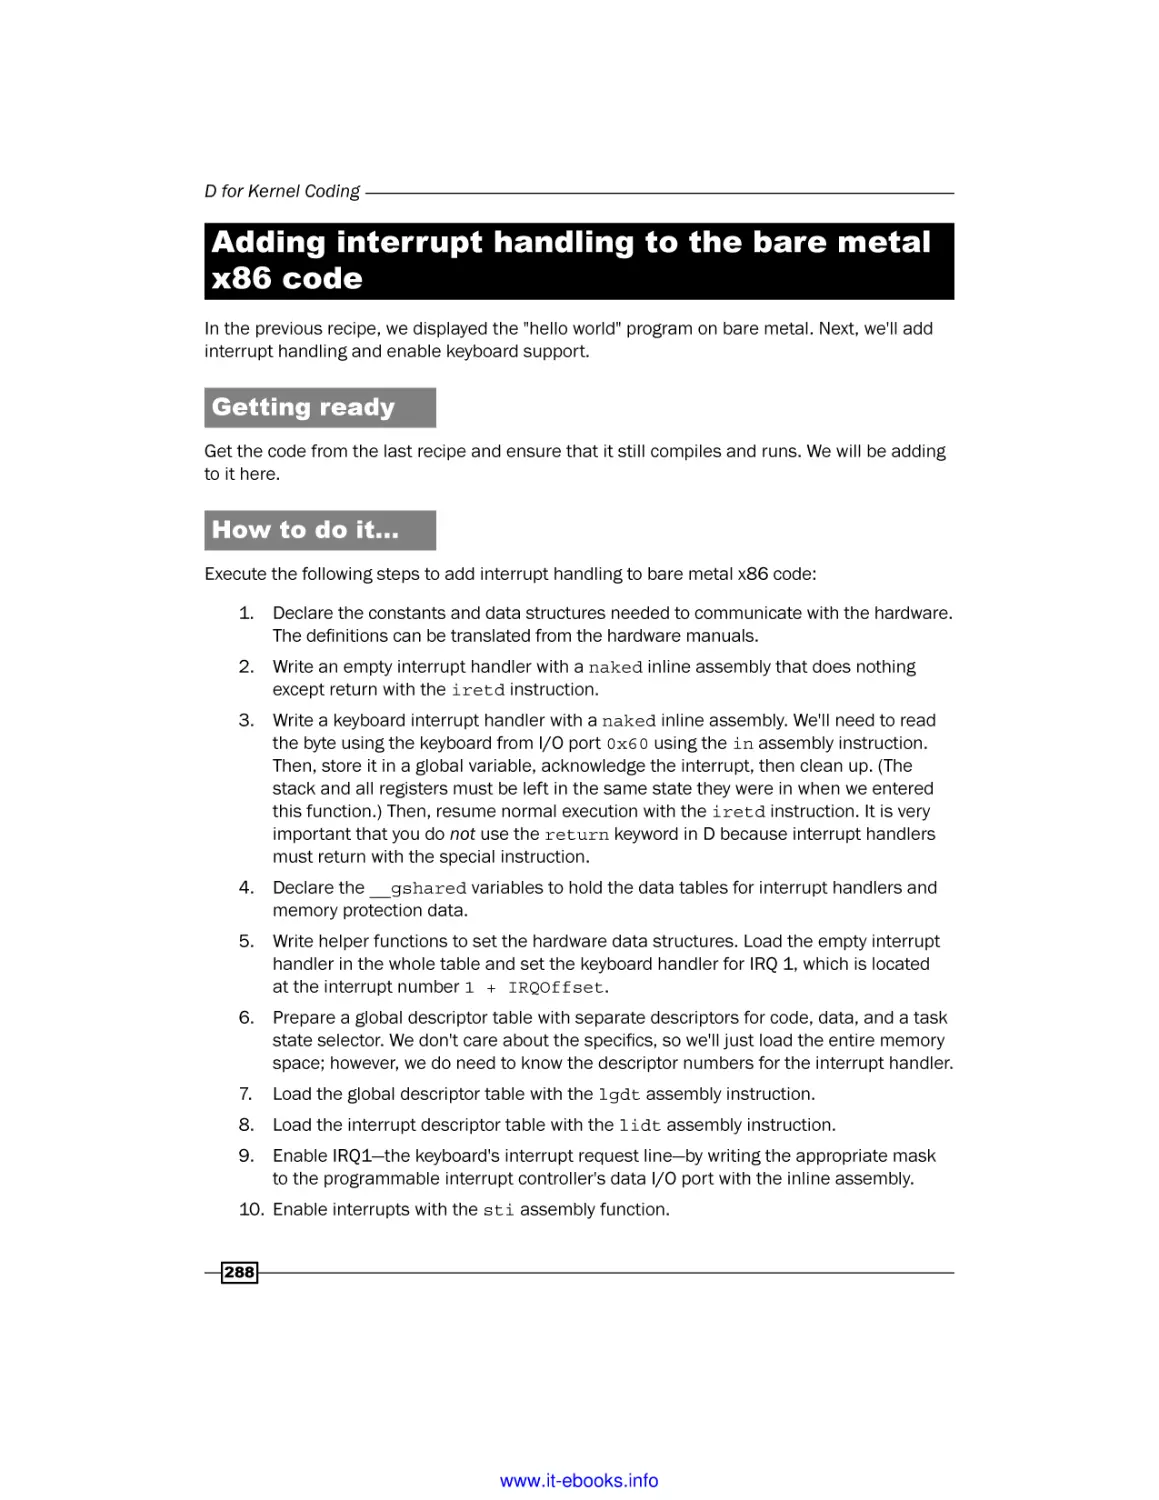 Adding interrupt handling to bare metal